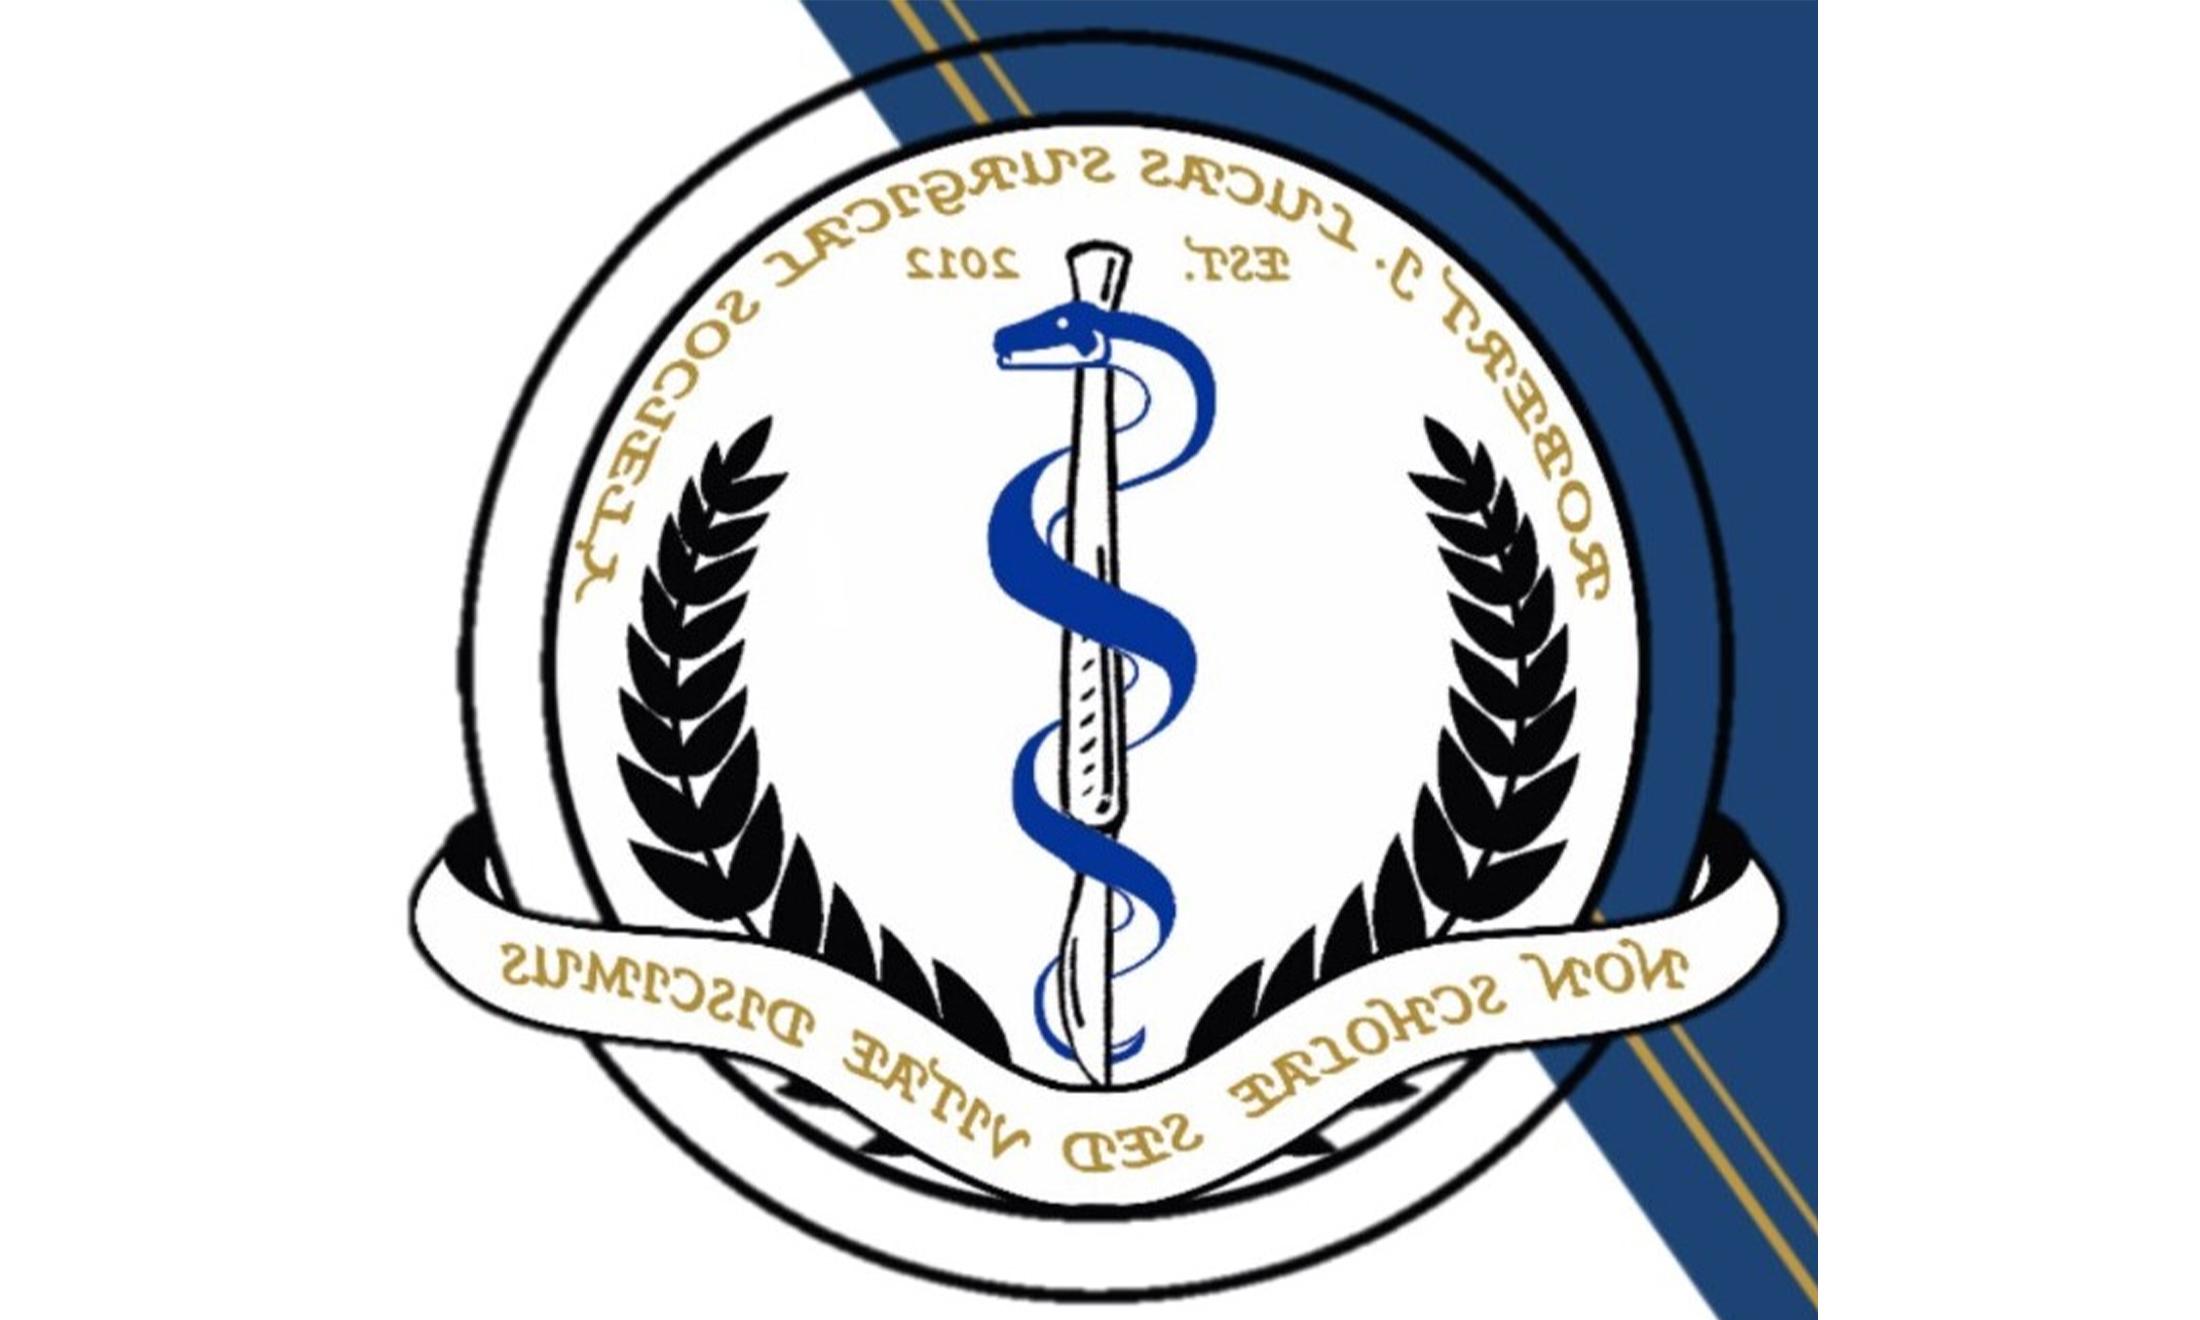 An image of the RJLSS logo